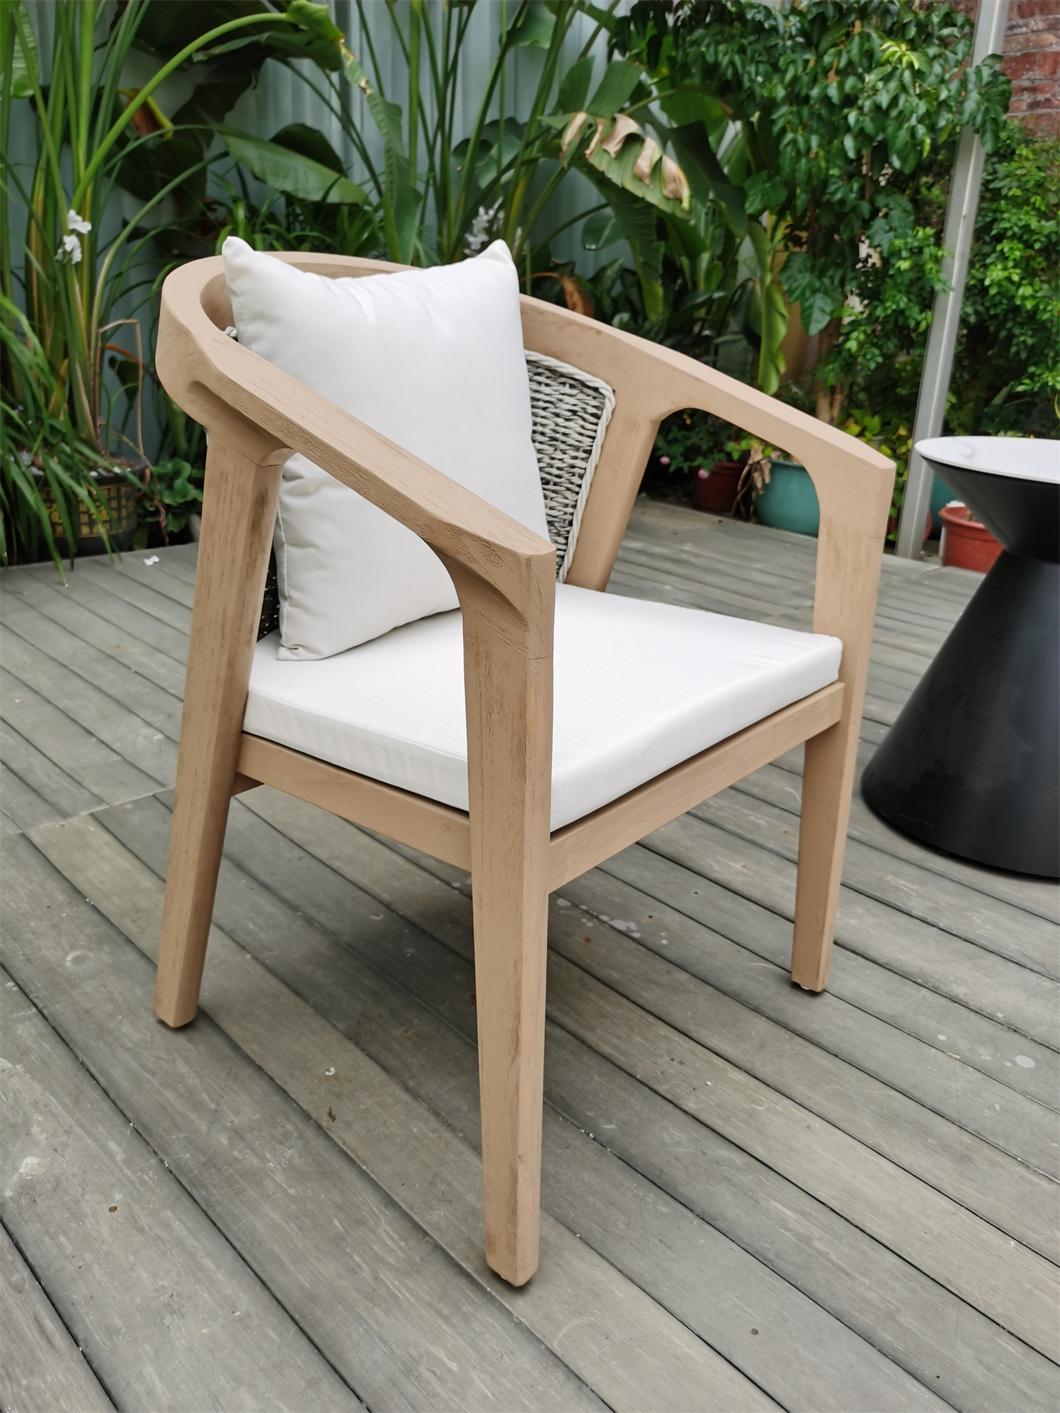 Factory Outdoor Modern Style Wooden White Garden Patio Rattan Furniture Chair